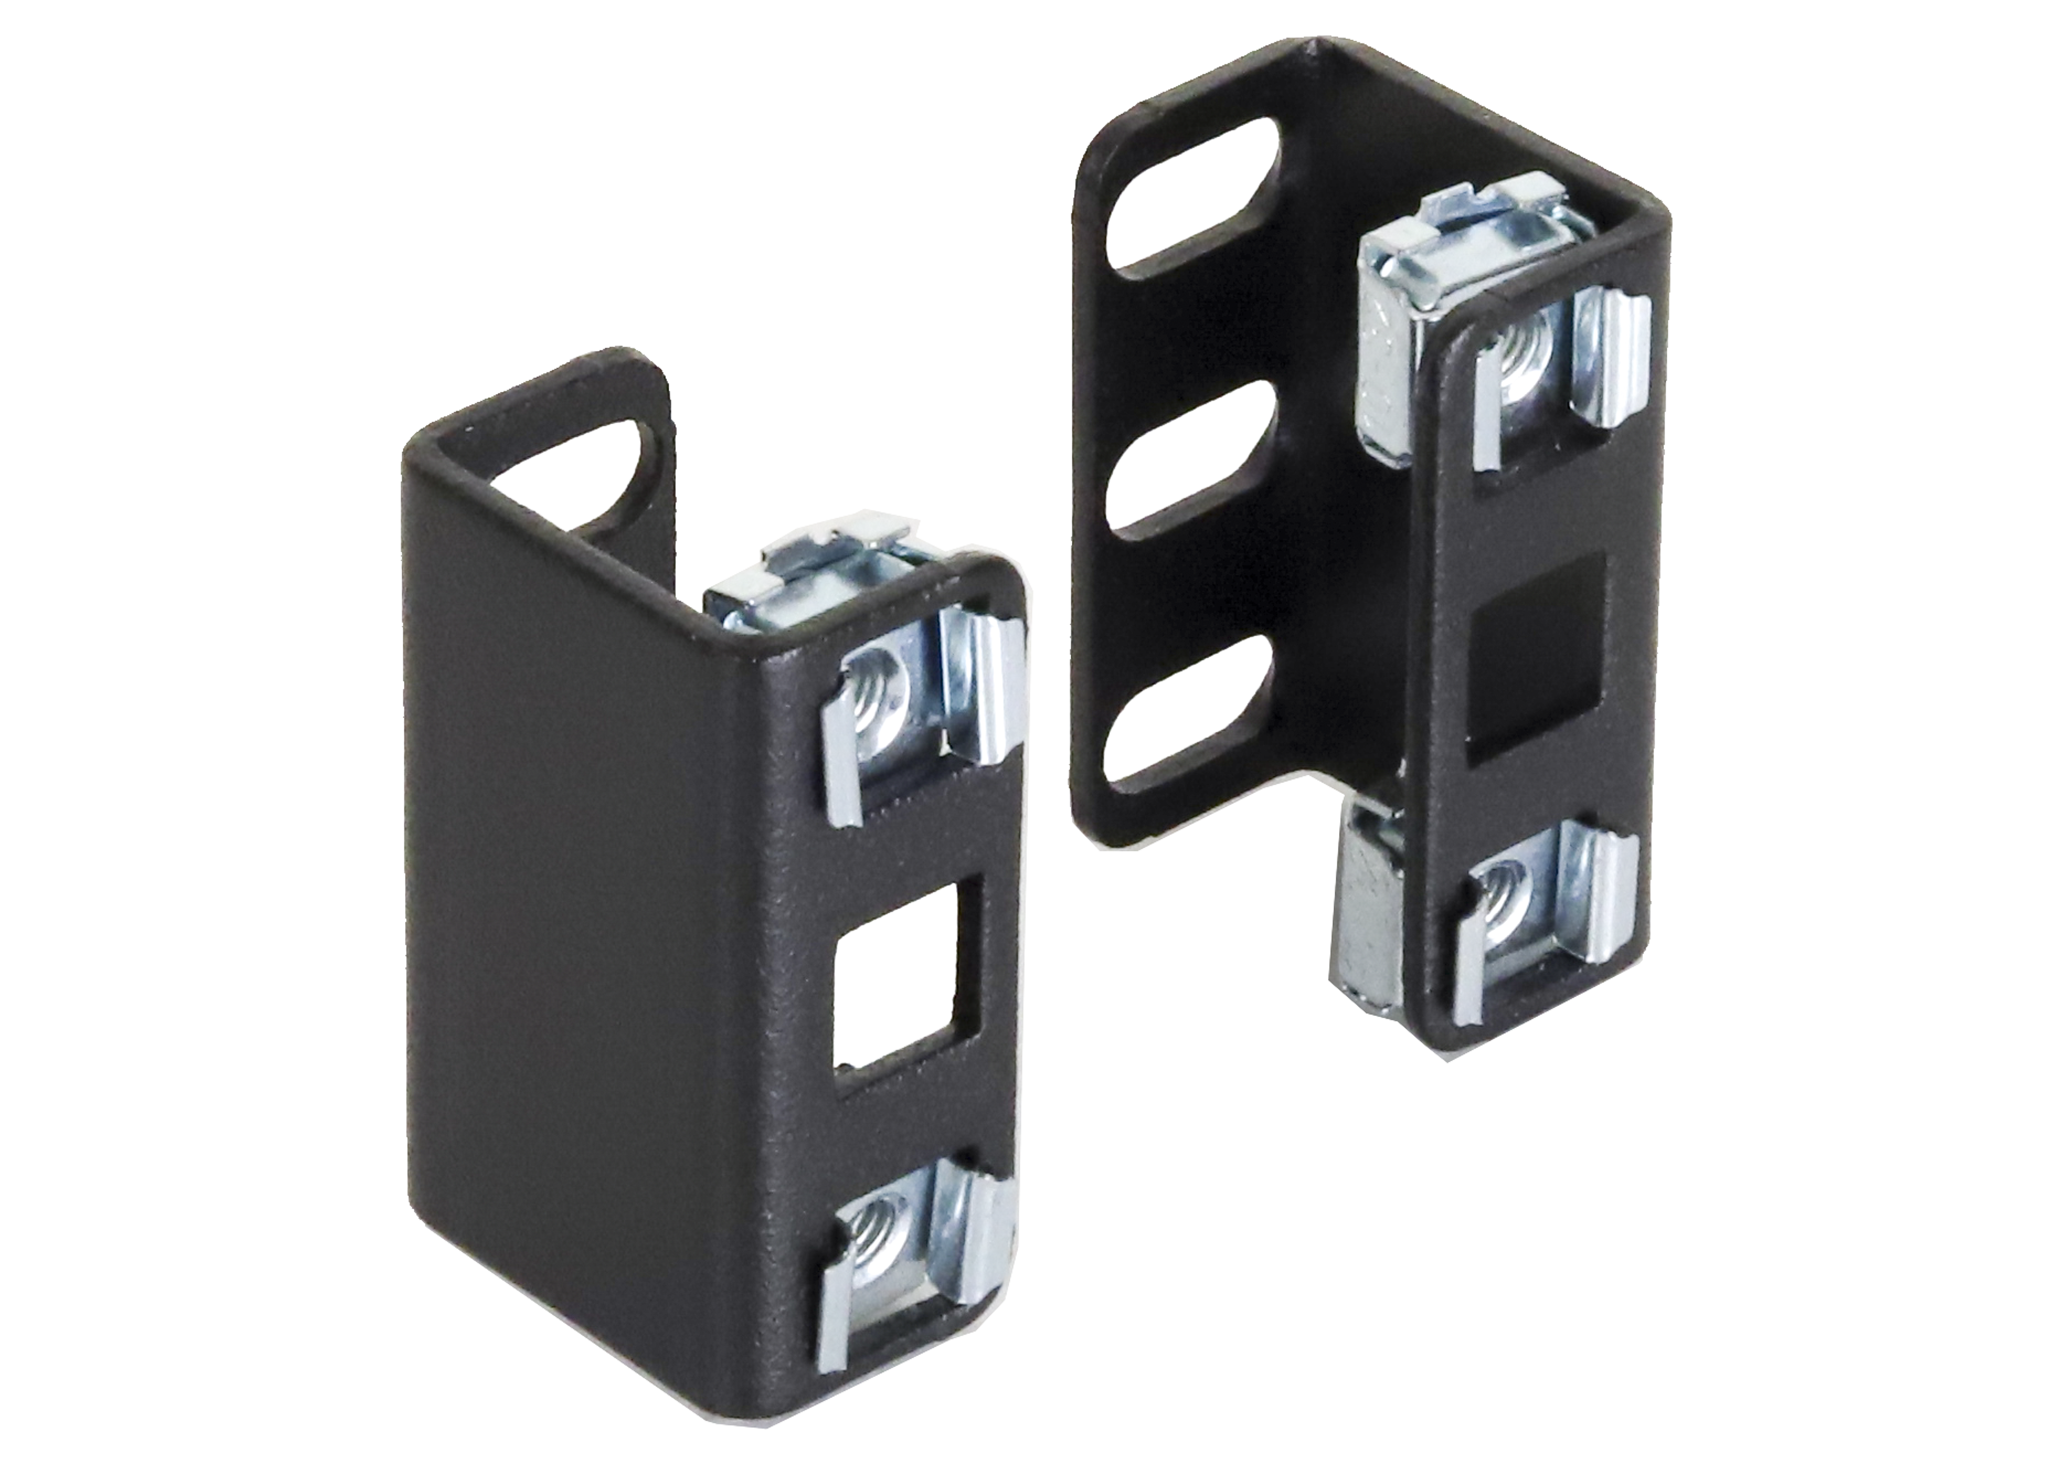 IAENCLOSURES RCB1061-1U 1U 1.1 inch rack extender brackets for EIA standard 19 inch, 23 inch and 24 inch wide rack cabinet